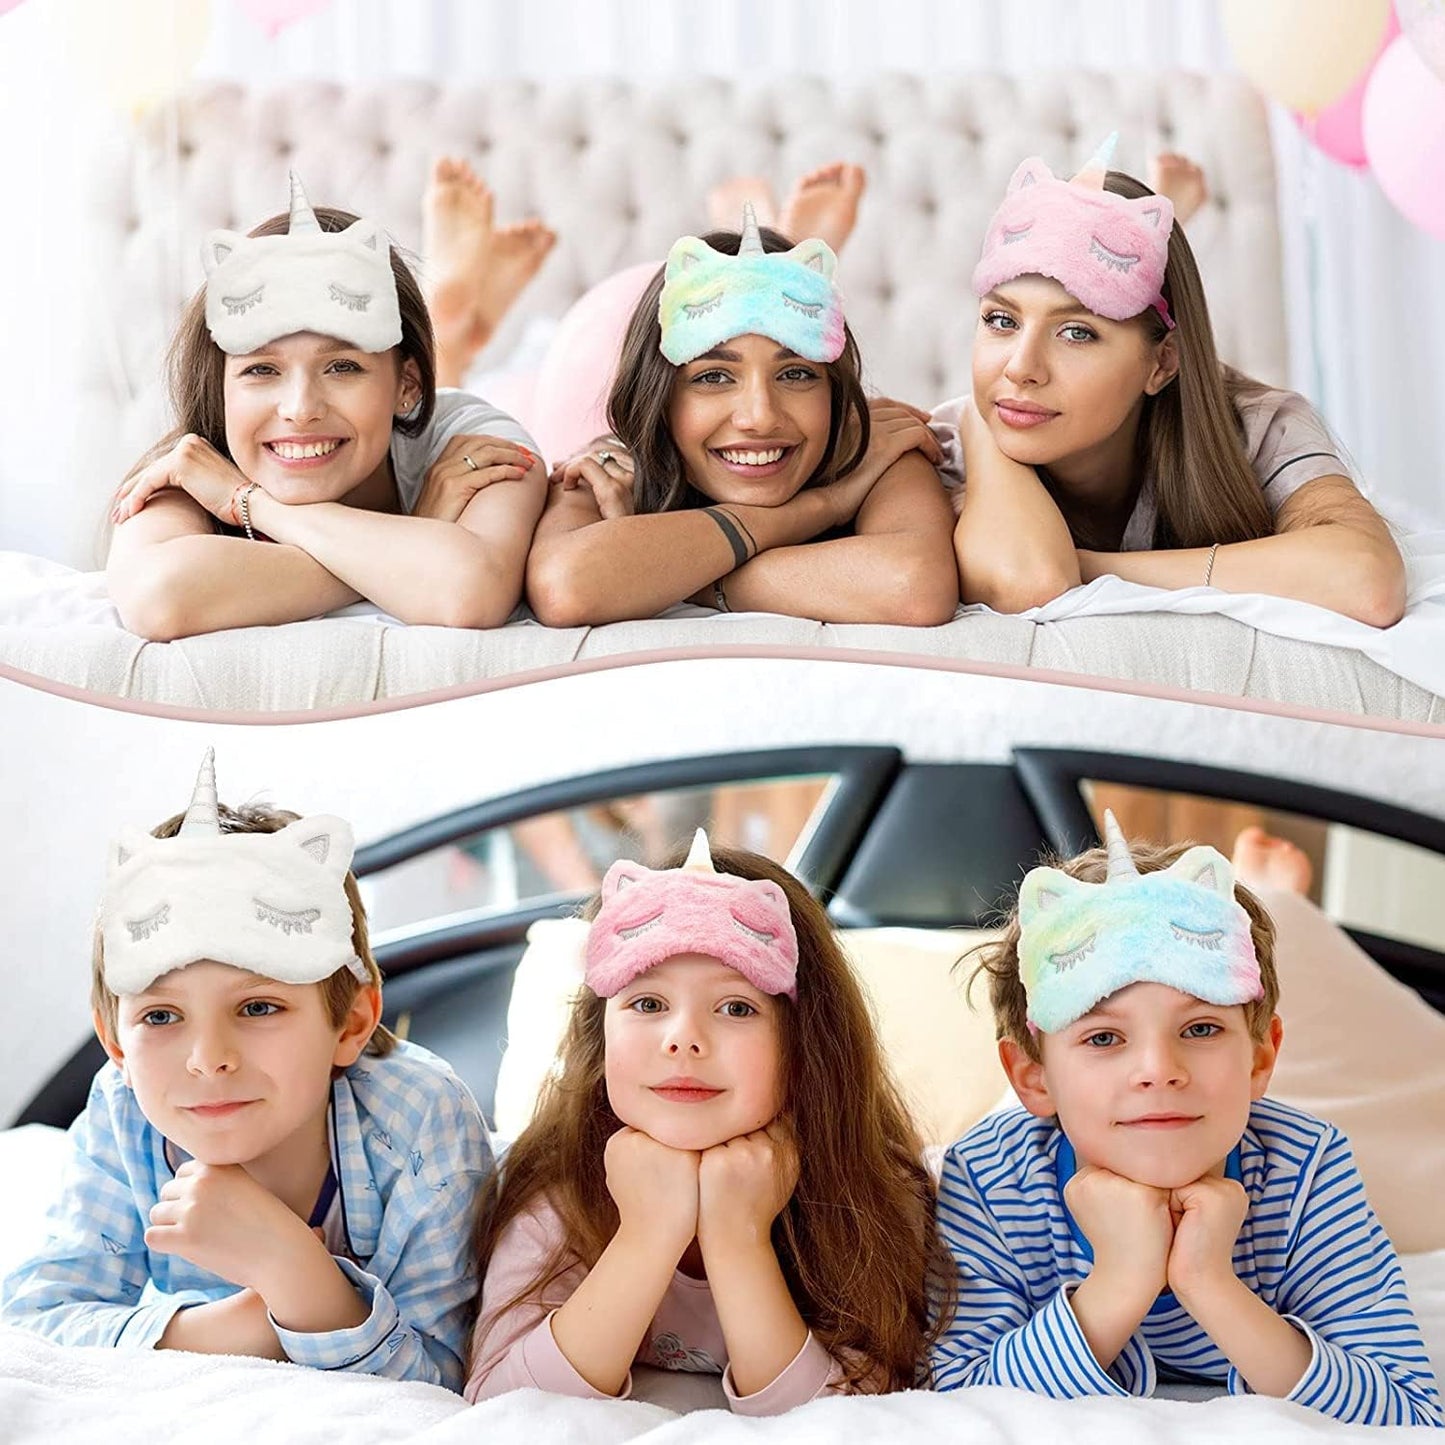 Eye Mask for Sleeping, Cute Unicorn Soft Fluffy Plush Sleep Mask Novelty Blindfold Eye Covers for Women Girls Kids